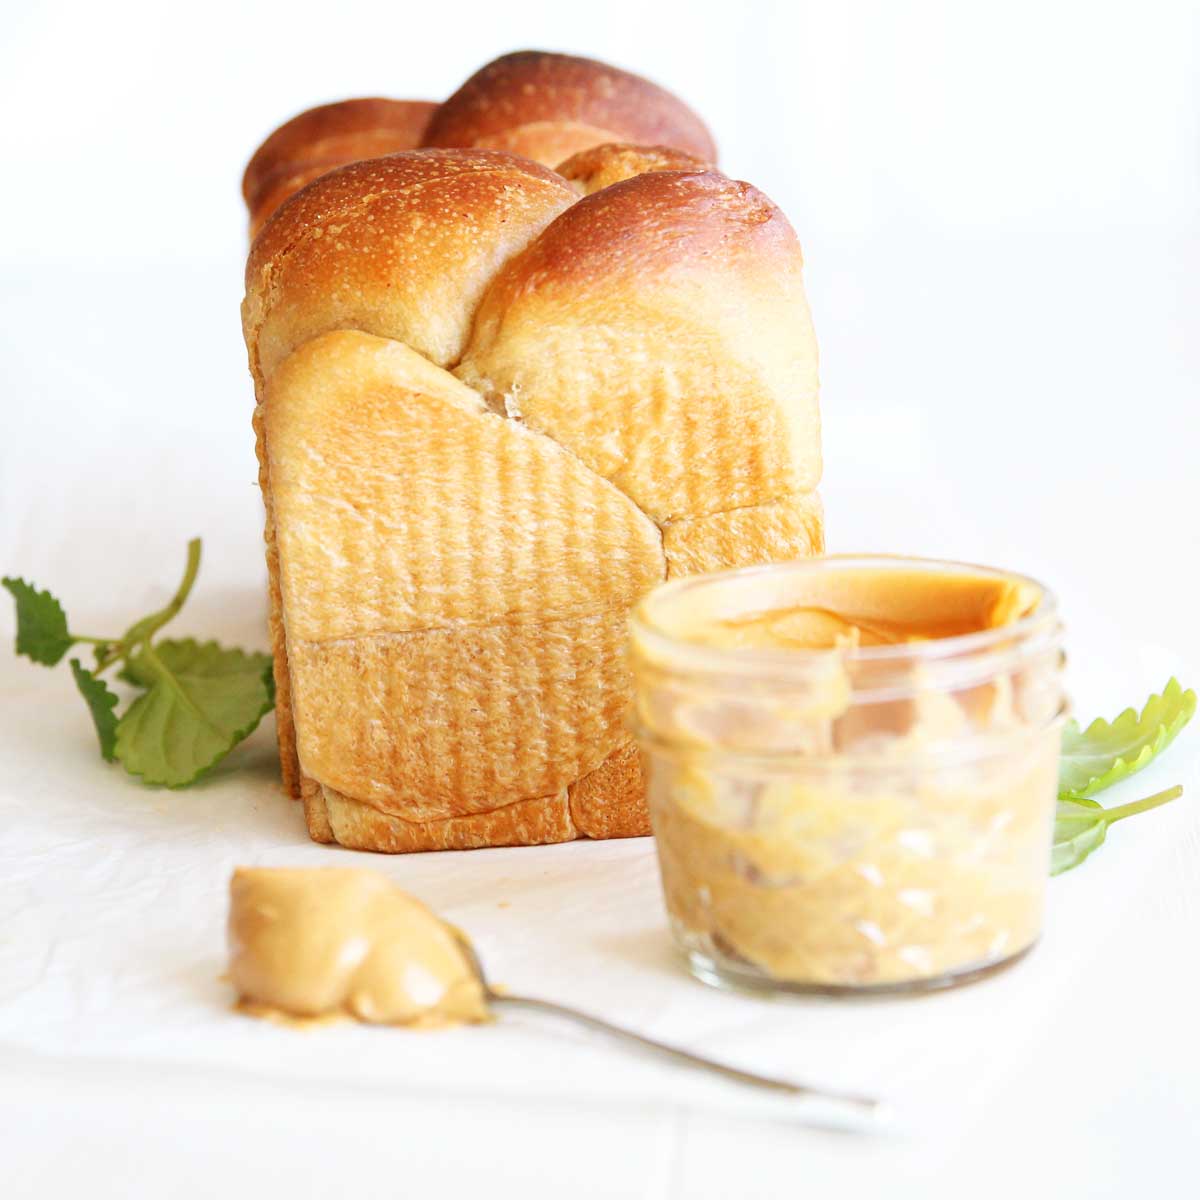 Peanut Butter Yeast Bread (A Healthier Vegan "Brioche" Recipe) - Low Calorie Pumpkin Bread